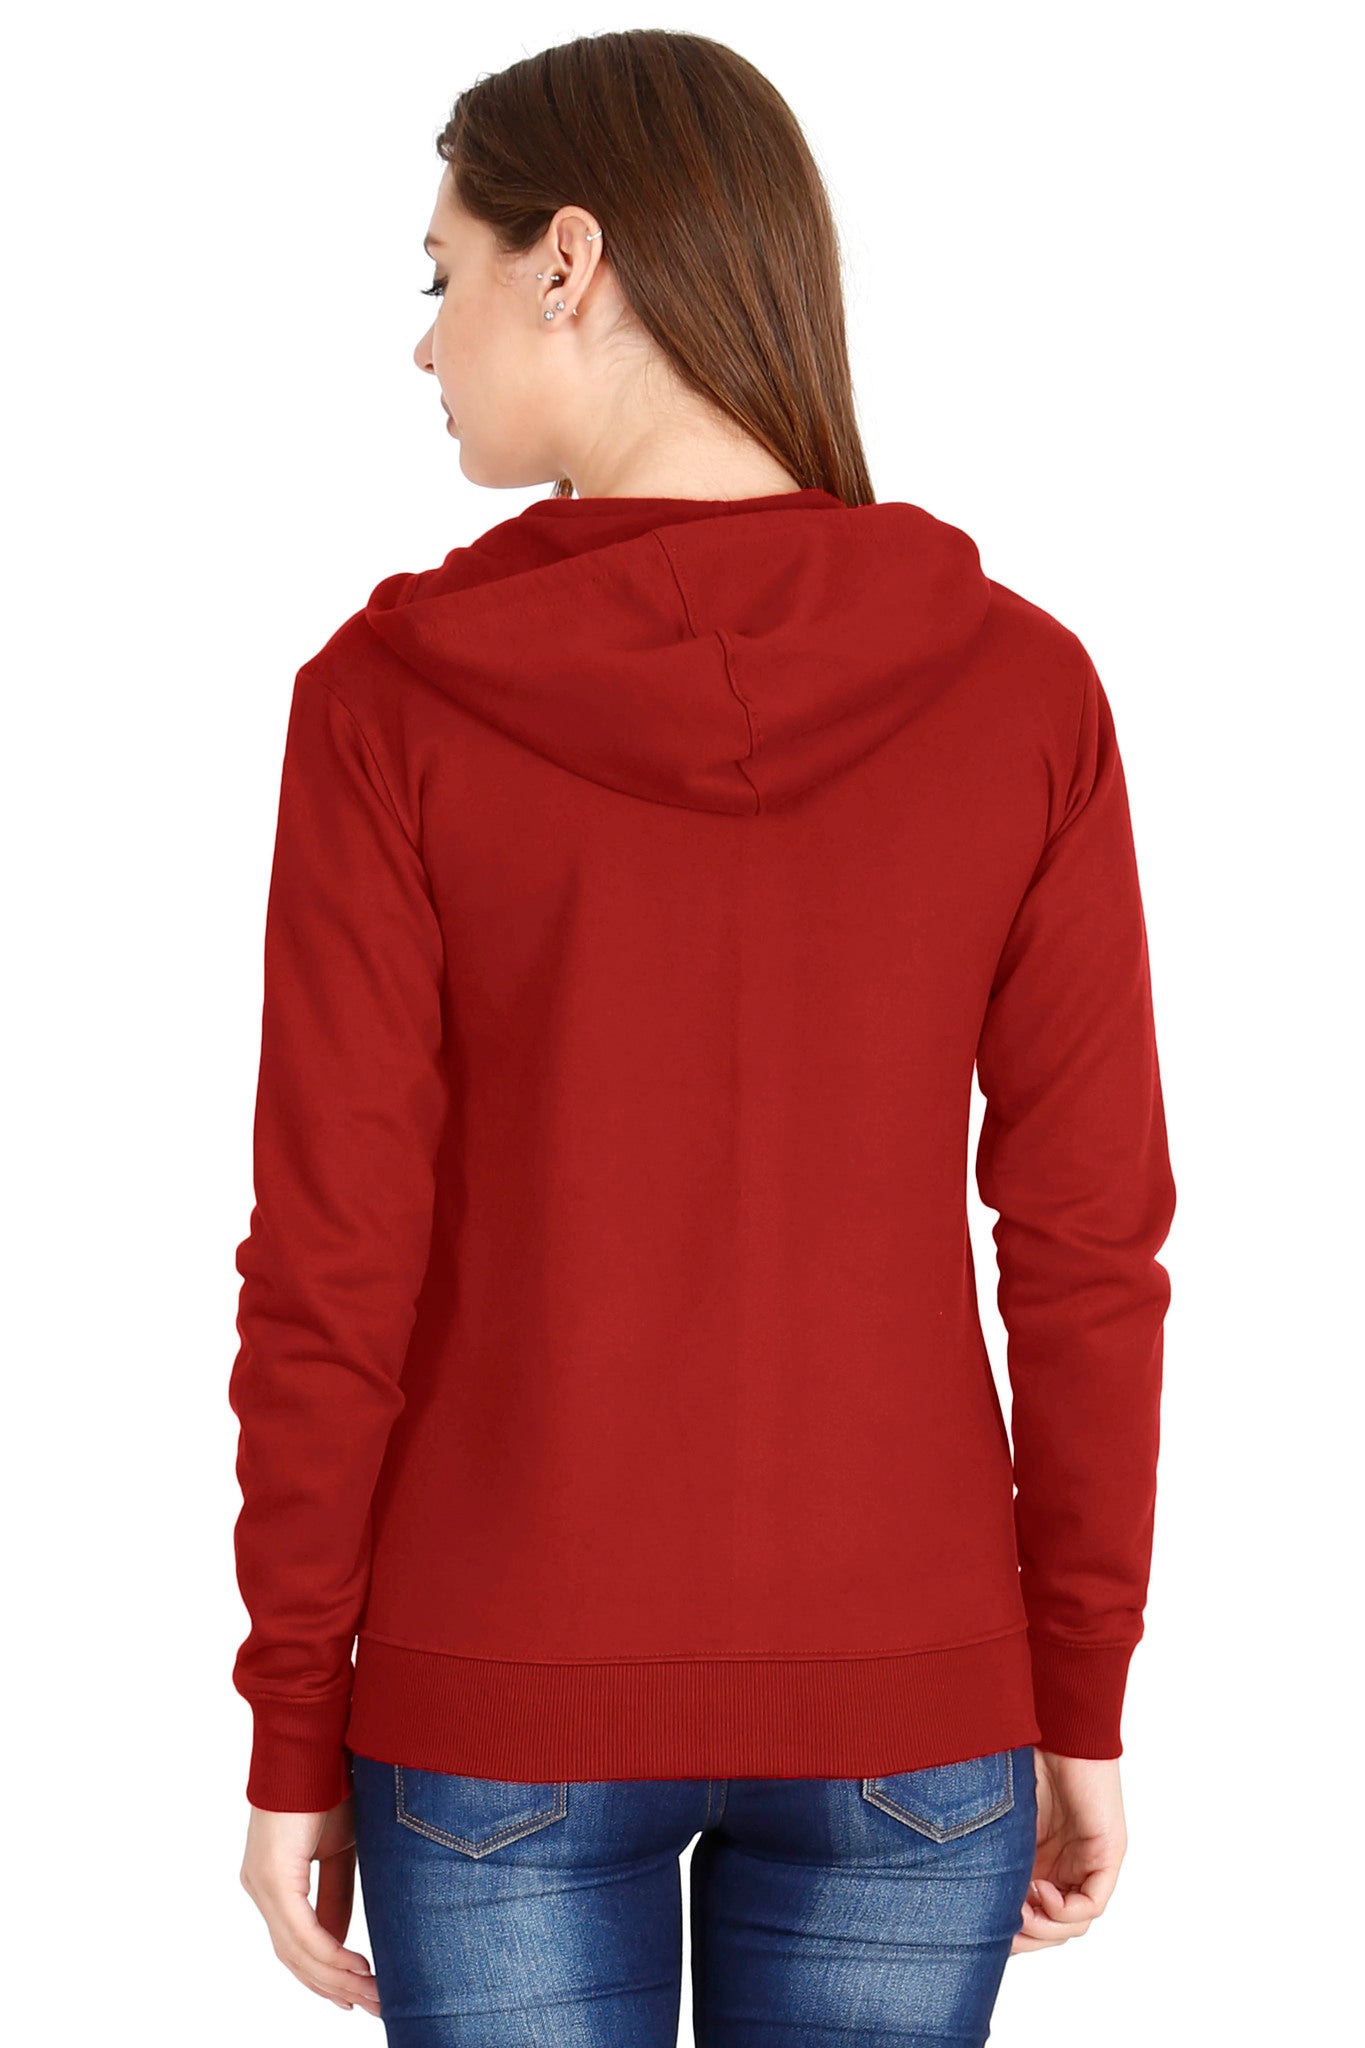 Women's Cotton Plain Full Sleeve Red Color Hoodies/Sweatshirt